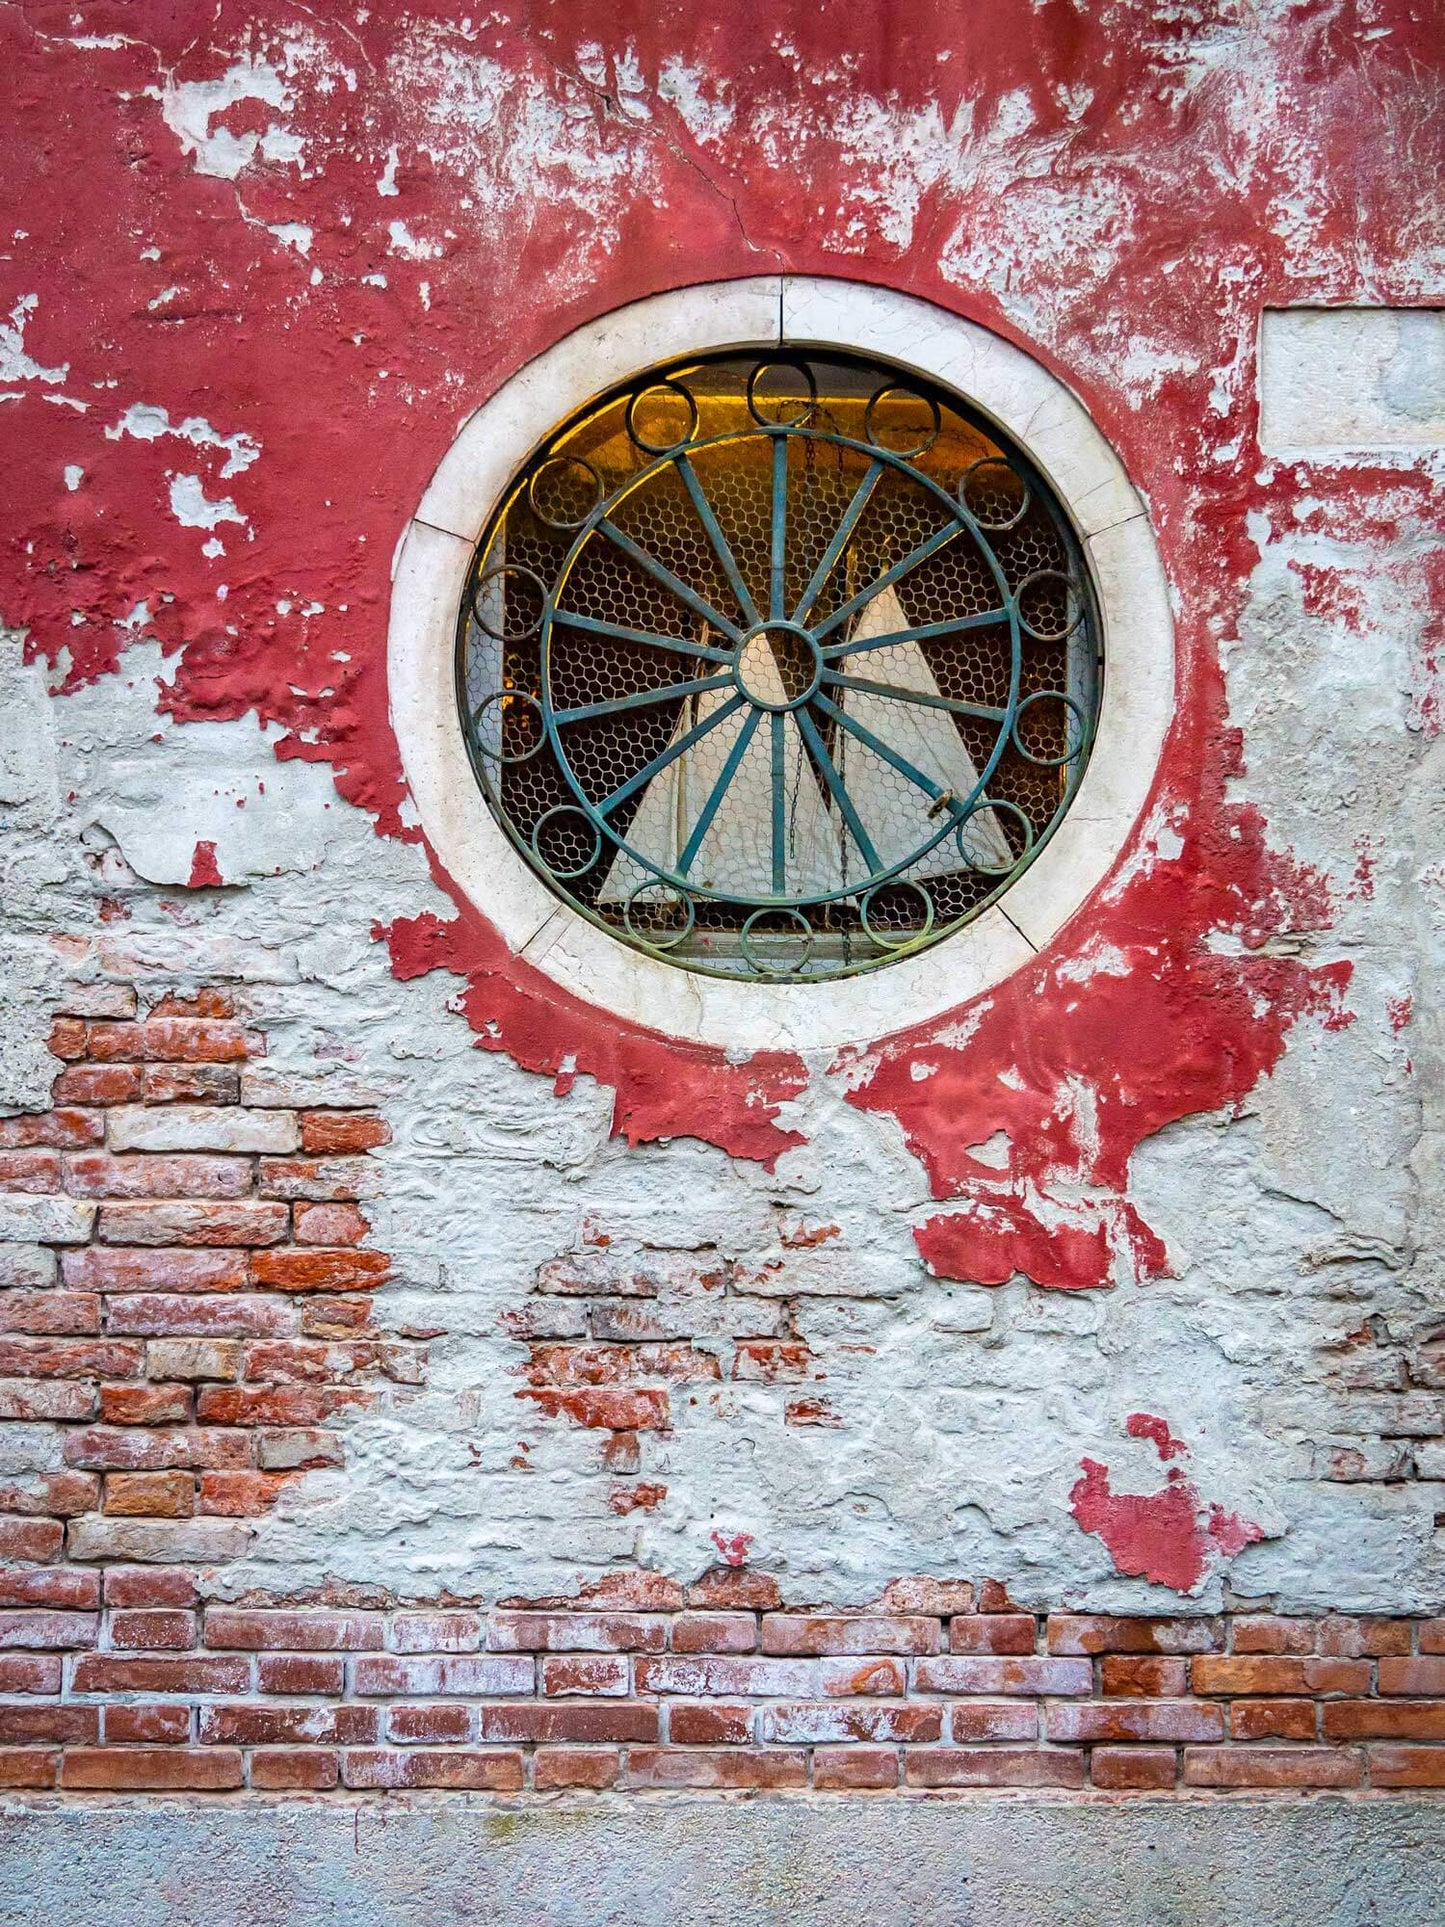 Porthole, Venice, Italy 2014